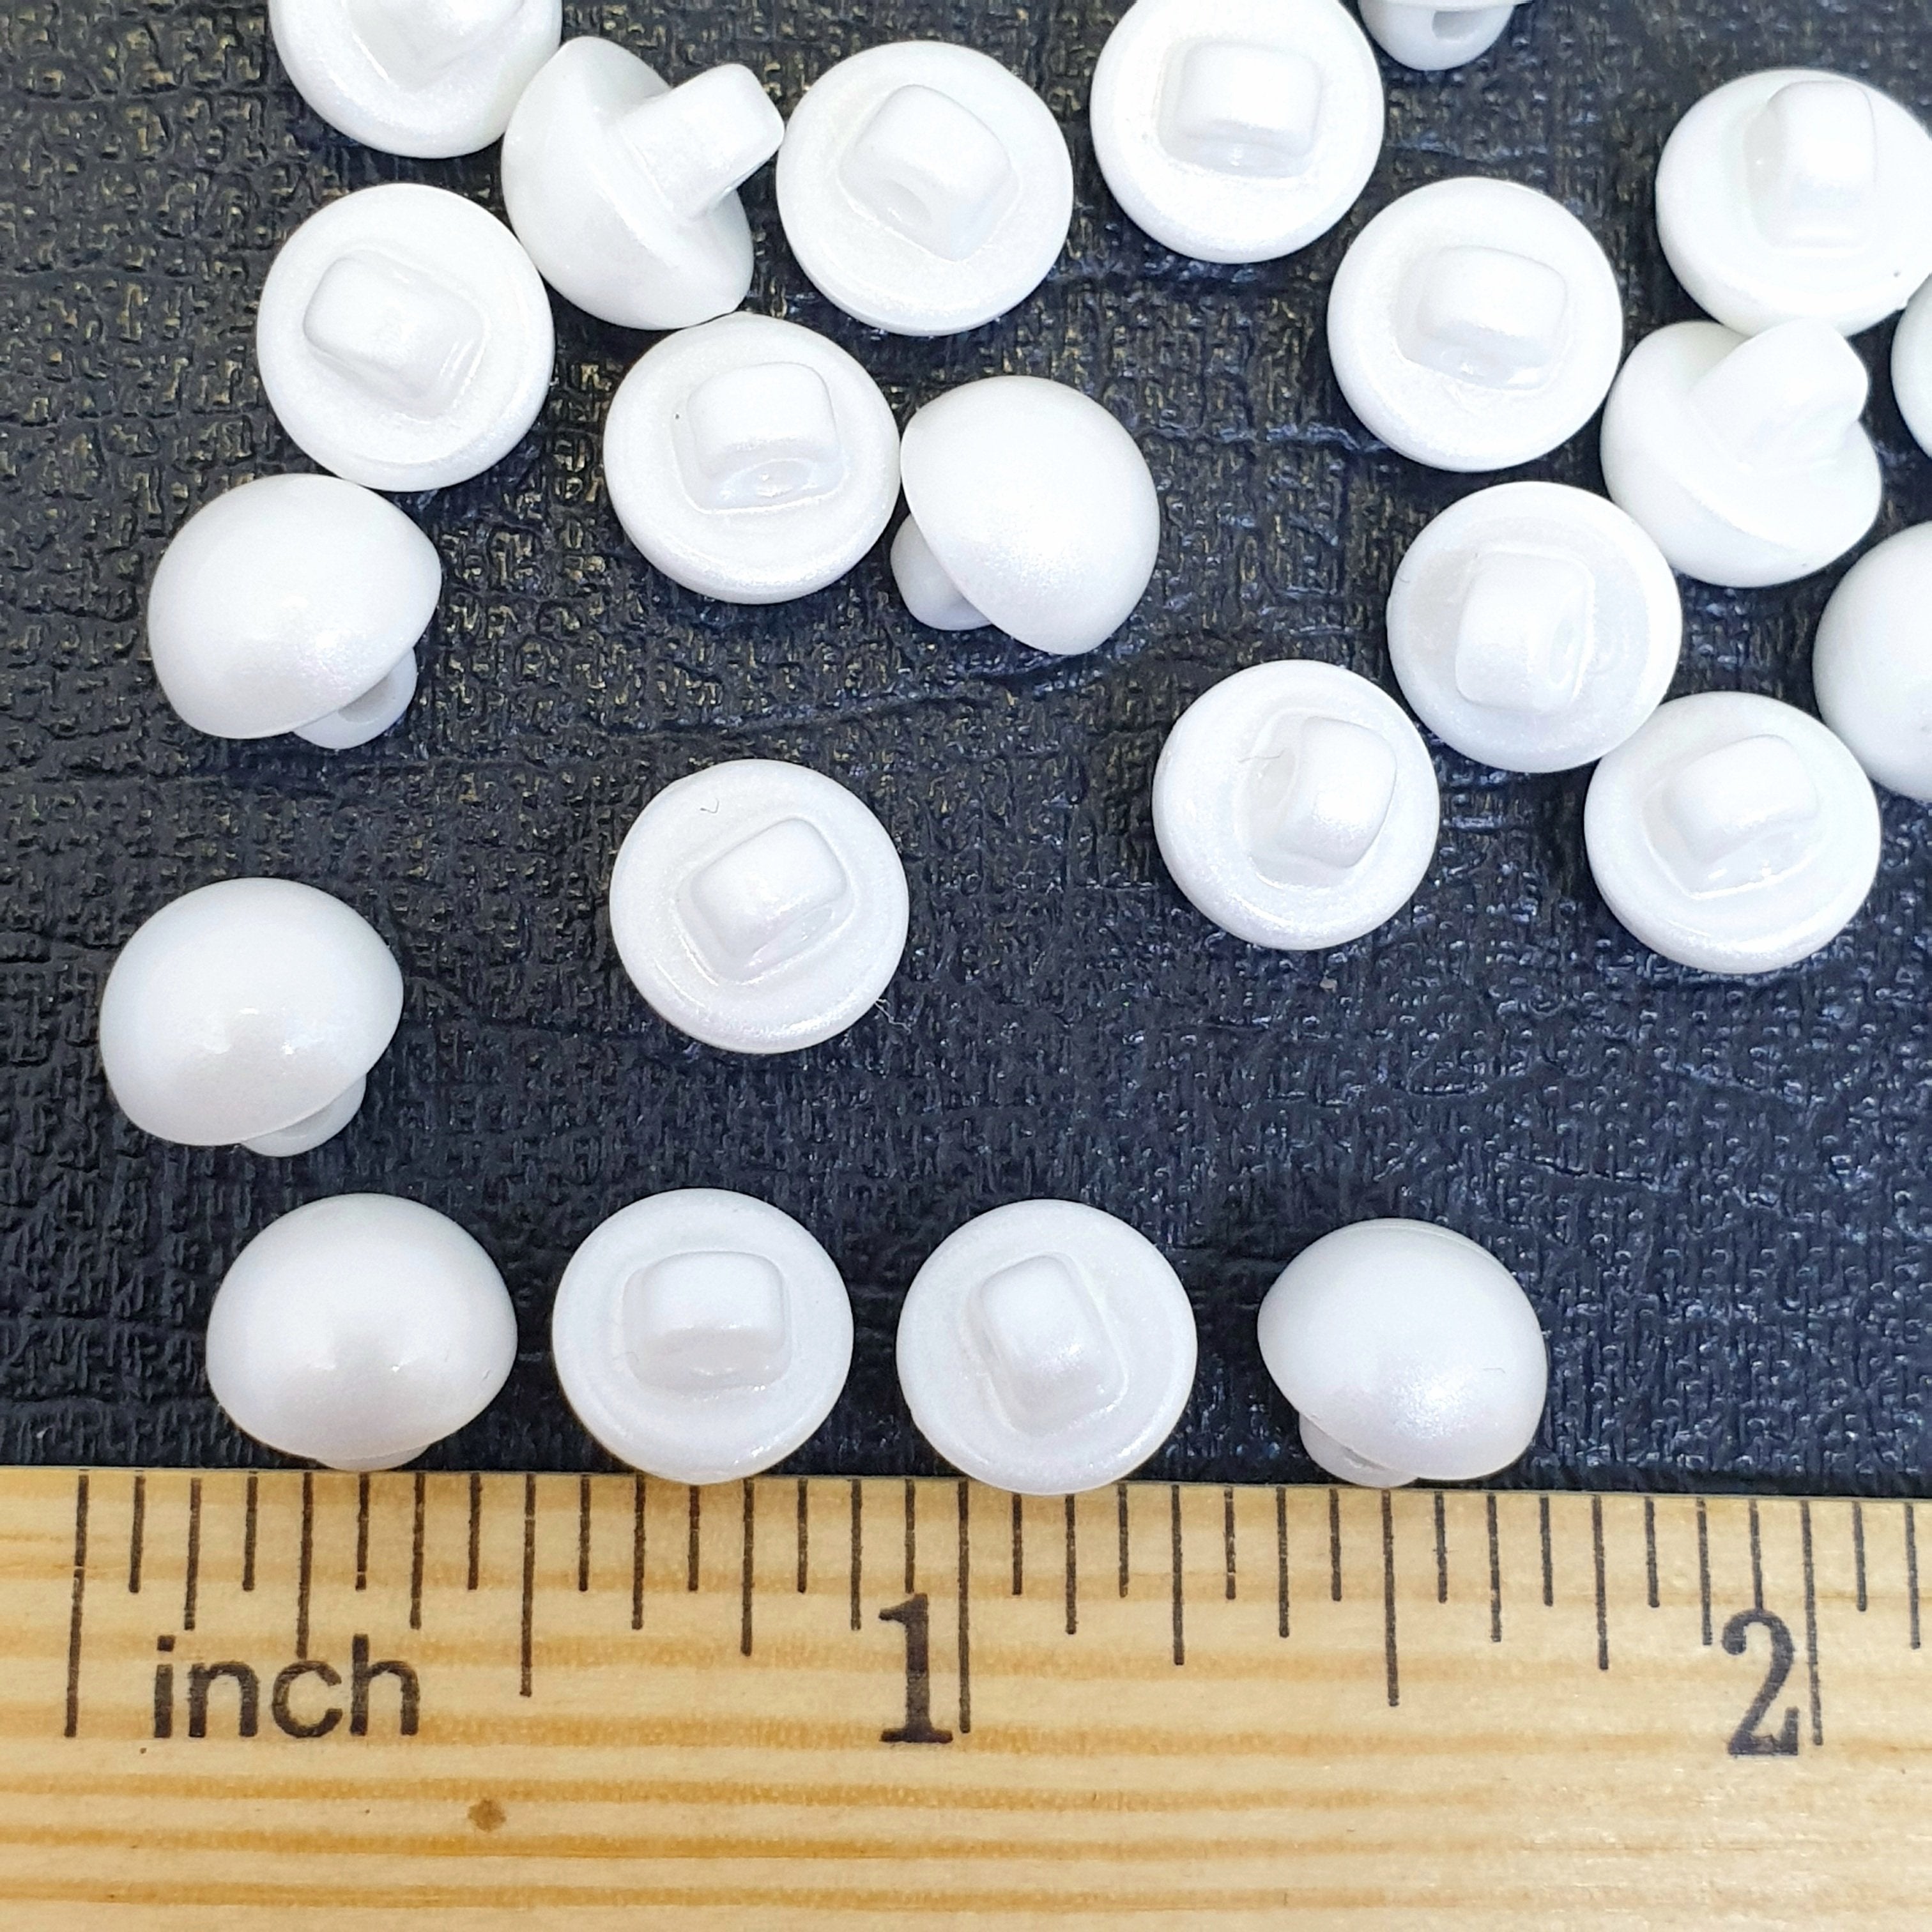 MajorCrafts 30pcs 10mm White High-Grade Acrylic Small Round Sewing Mushroom Shank Buttons